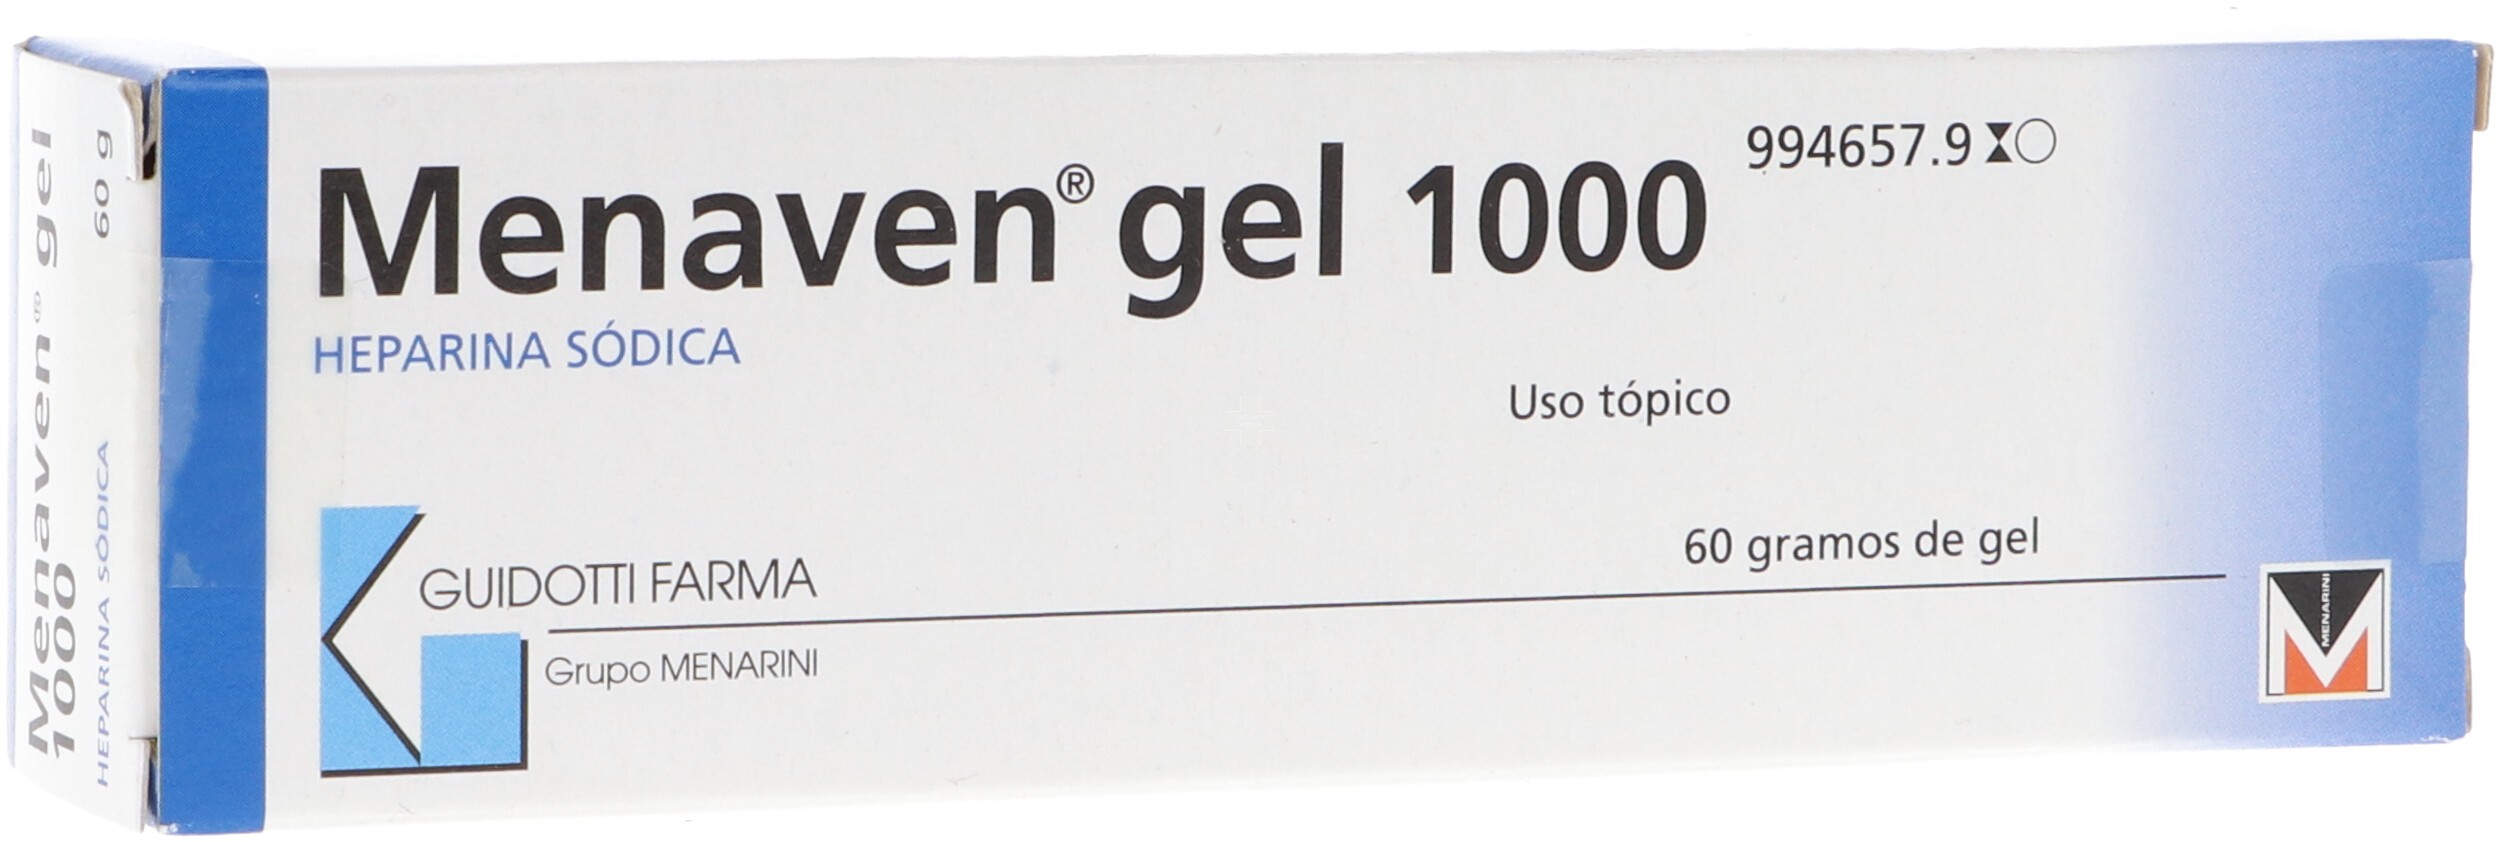 Menaven 1000 Ui/G gel - 1 Tubo De 60 g